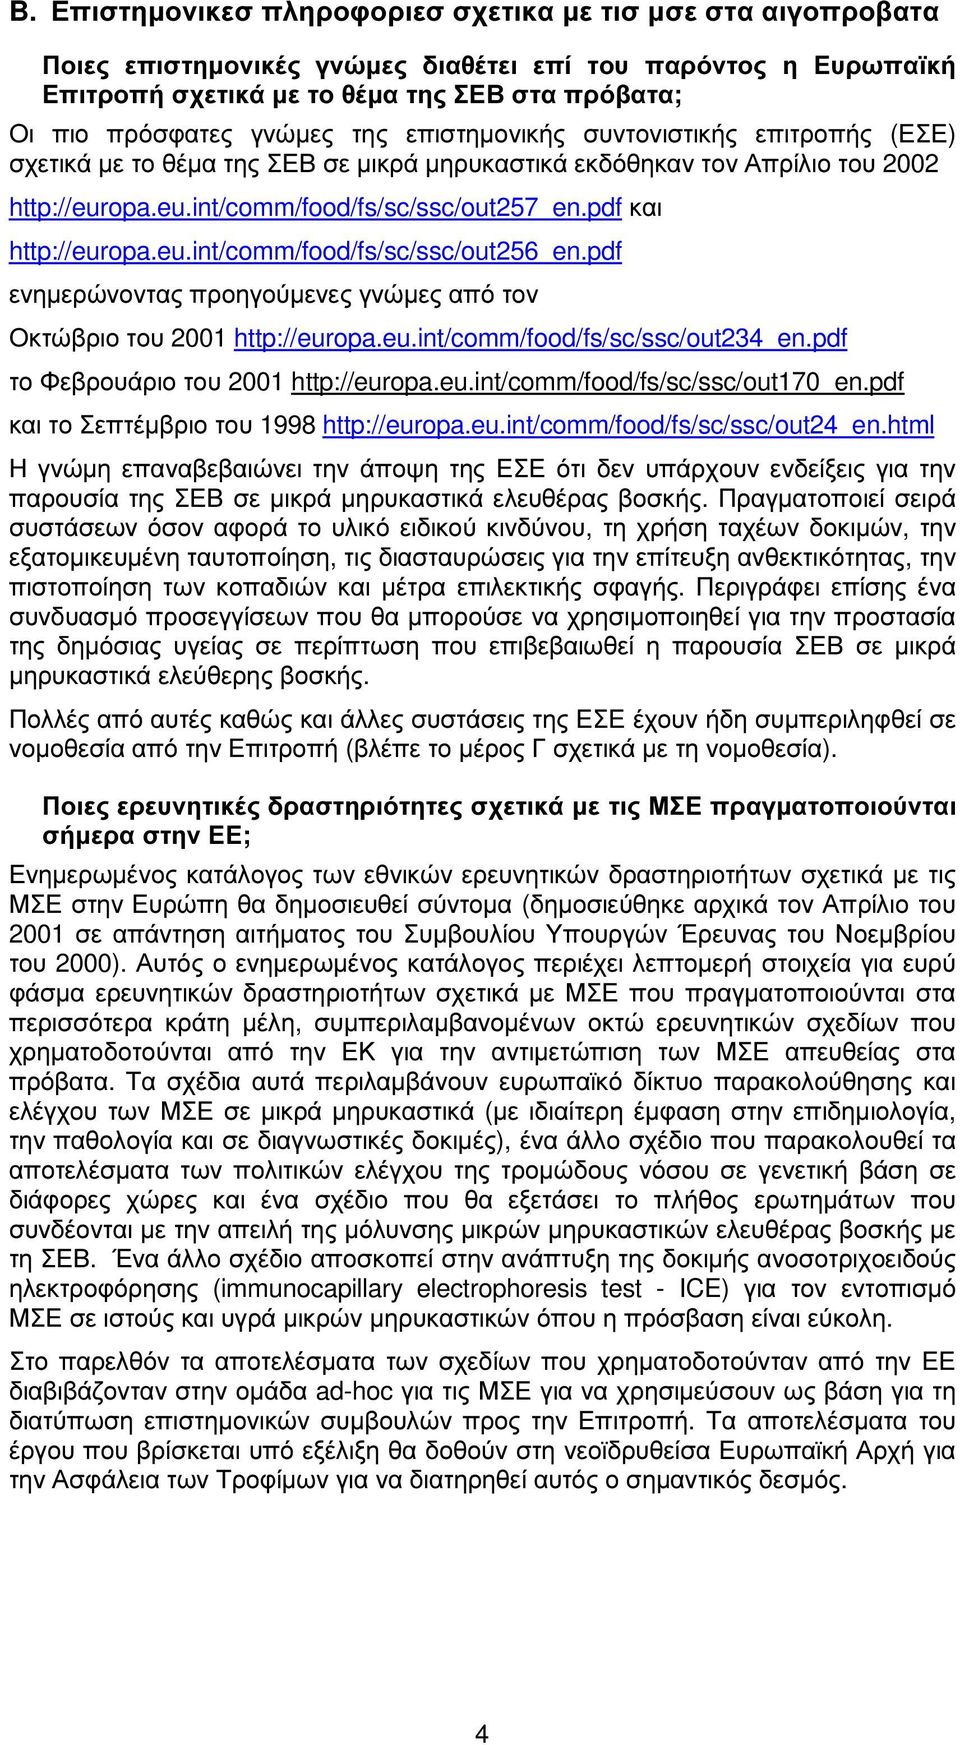 pdf και http://europa.eu.int/comm/food/fs/sc/ssc/out256_en.pdf ενηµερώνοντας προηγούµενες γνώµες από τον Οκτώβριο του 2001 http://europa.eu.int/comm/food/fs/sc/ssc/out234_en.